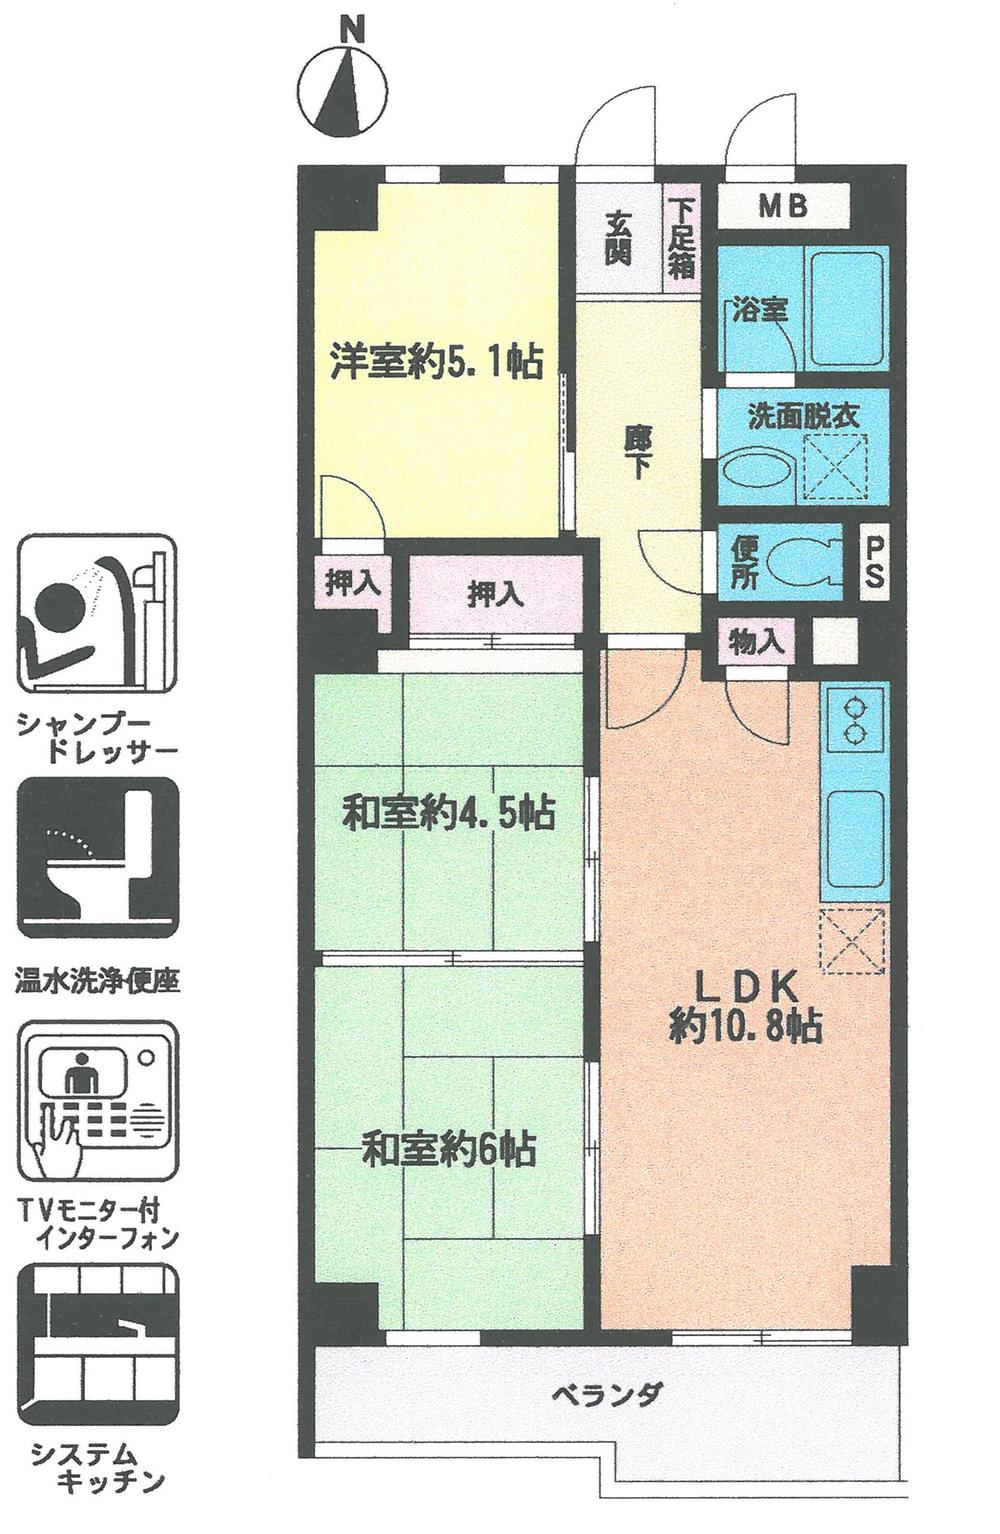 Floor plan. 3LDK, Price 13.8 million yen, Occupied area 62.16 sq m , Balcony area 6.69 sq m floor plan